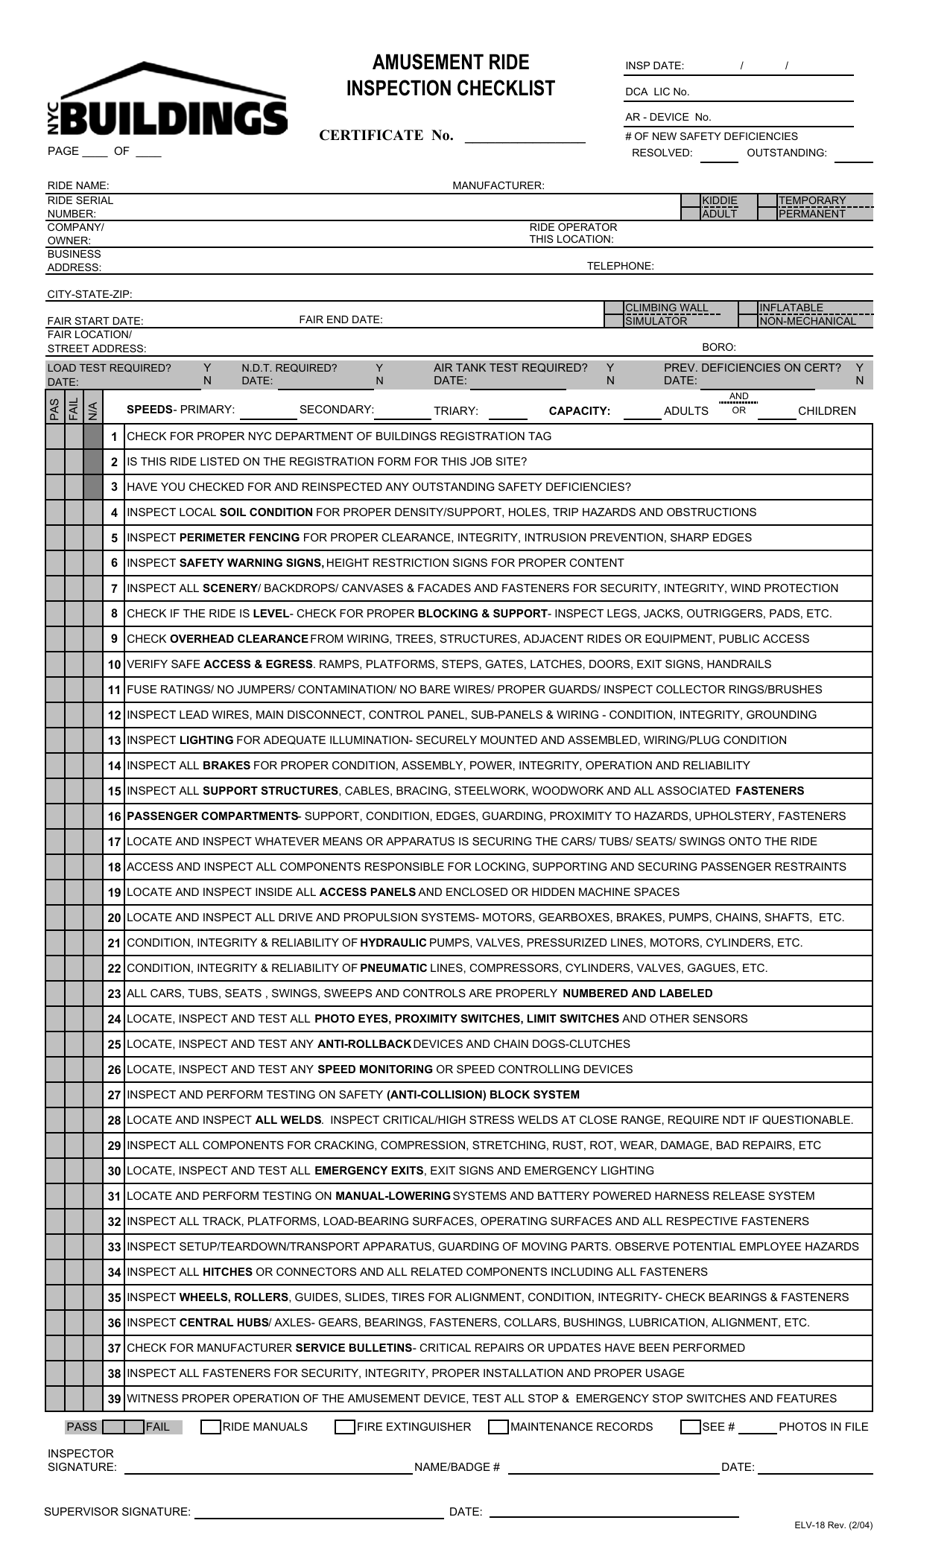 Form ELV-18 Amusement Ride Inspection Checklist - New York City, Page 1